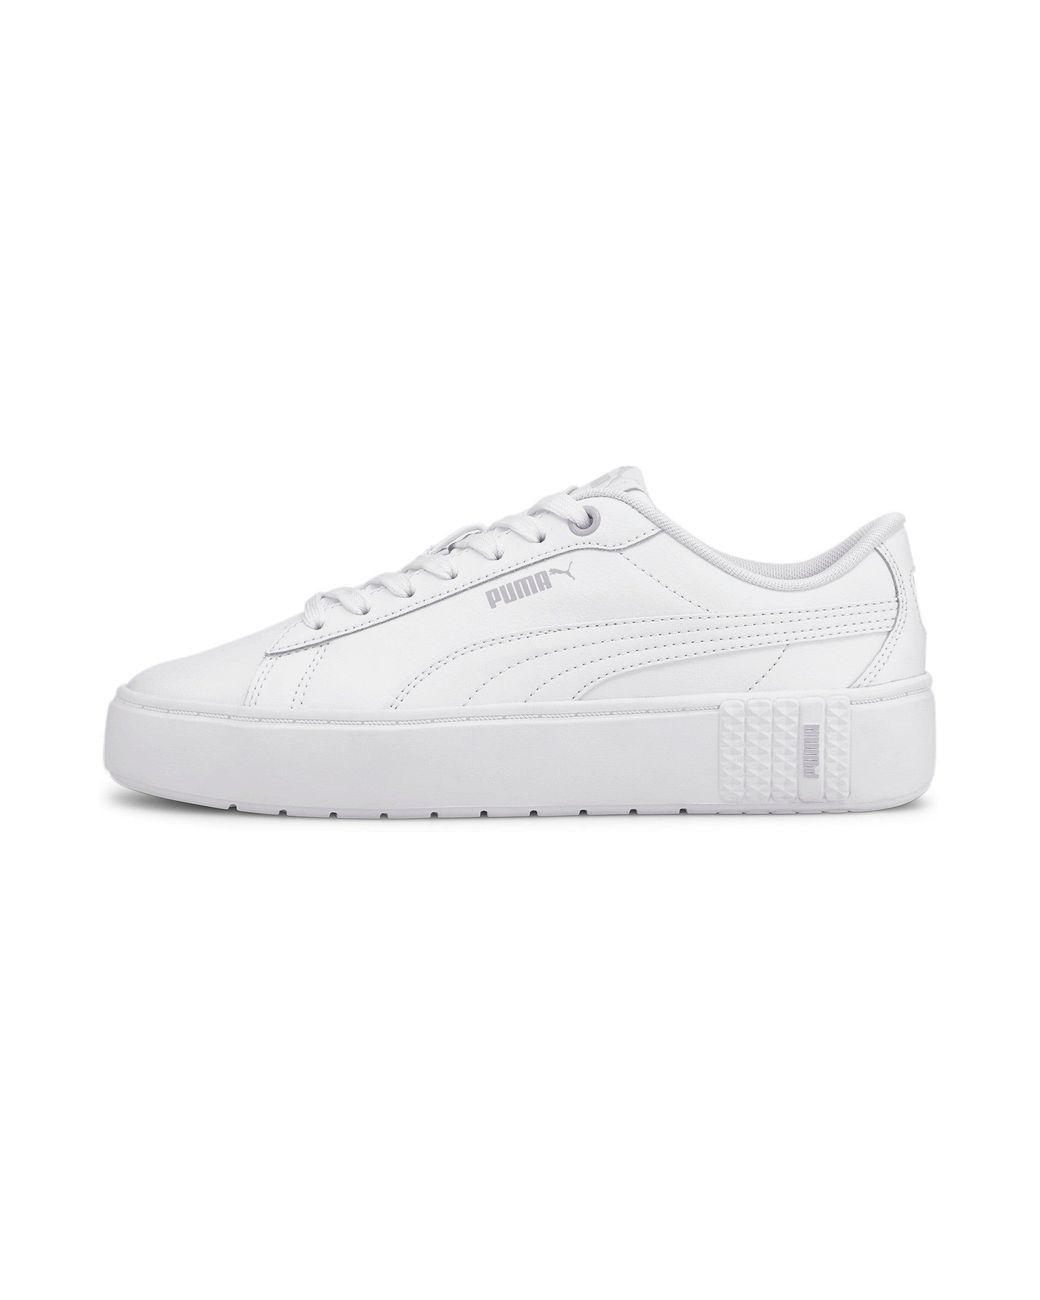 PUMA Smash Platform V2 Sneakers in White | Lyst